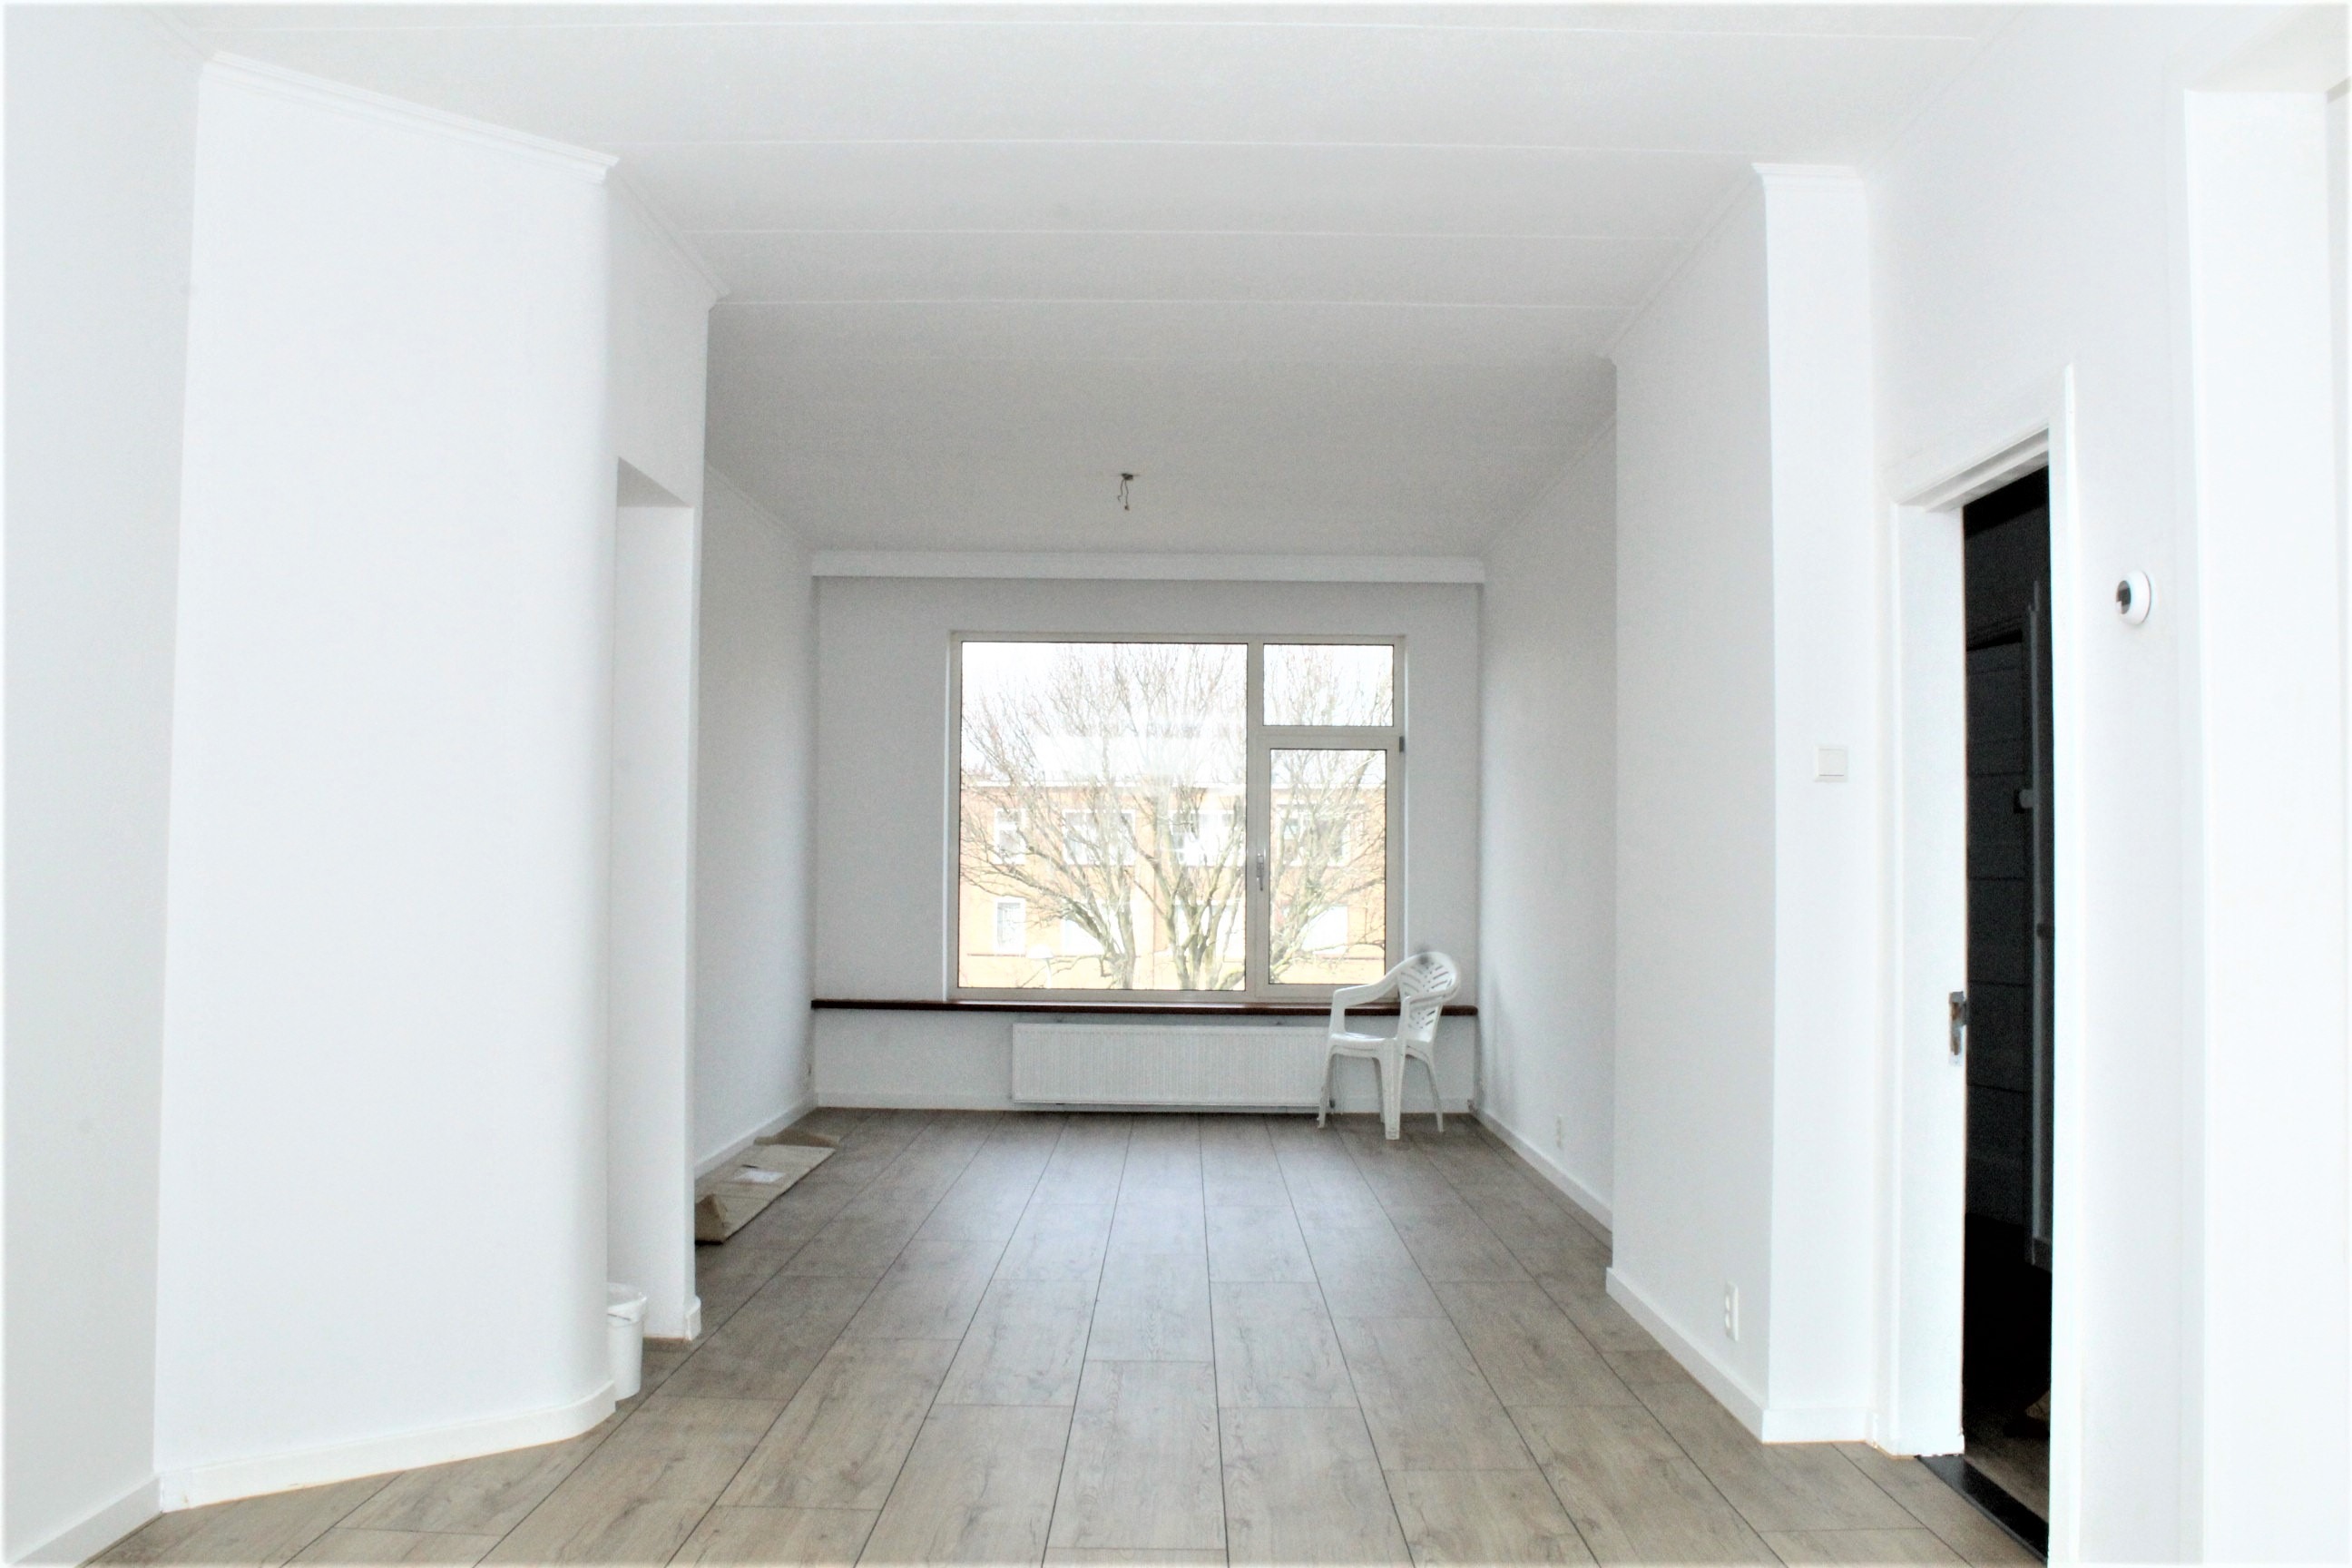 Woning / appartement - Den Haag - Mient 46